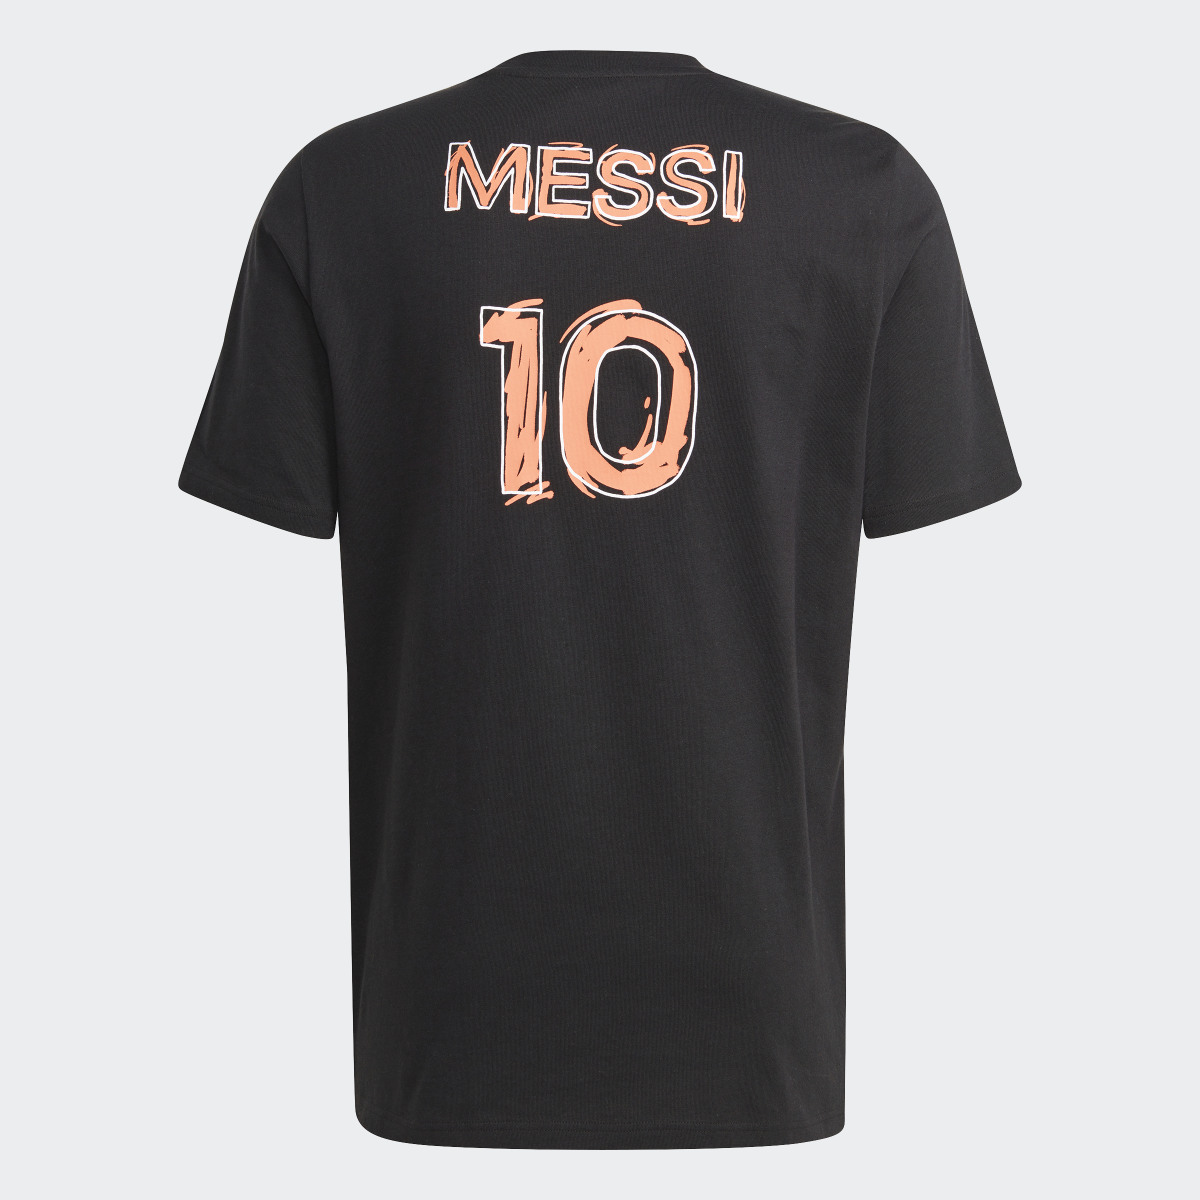 Adidas Messi Football Icon Graphic T-Shirt. 6